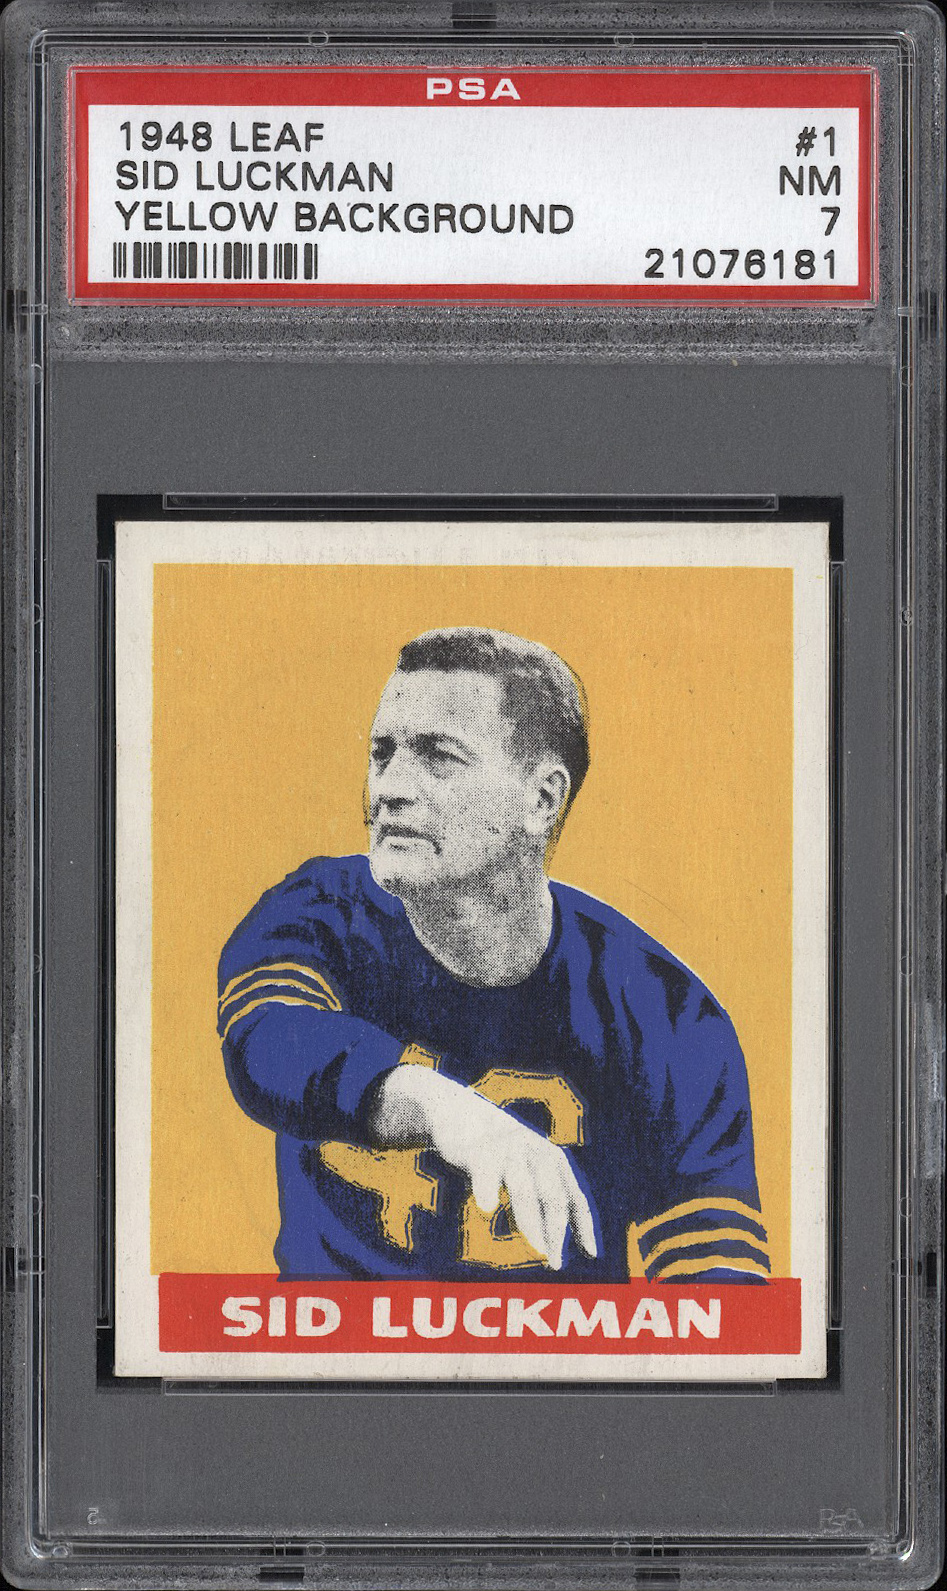  1948 Leaf #1 Sid Luckman (HOF RC - Yellow Background) - PSA NM 7